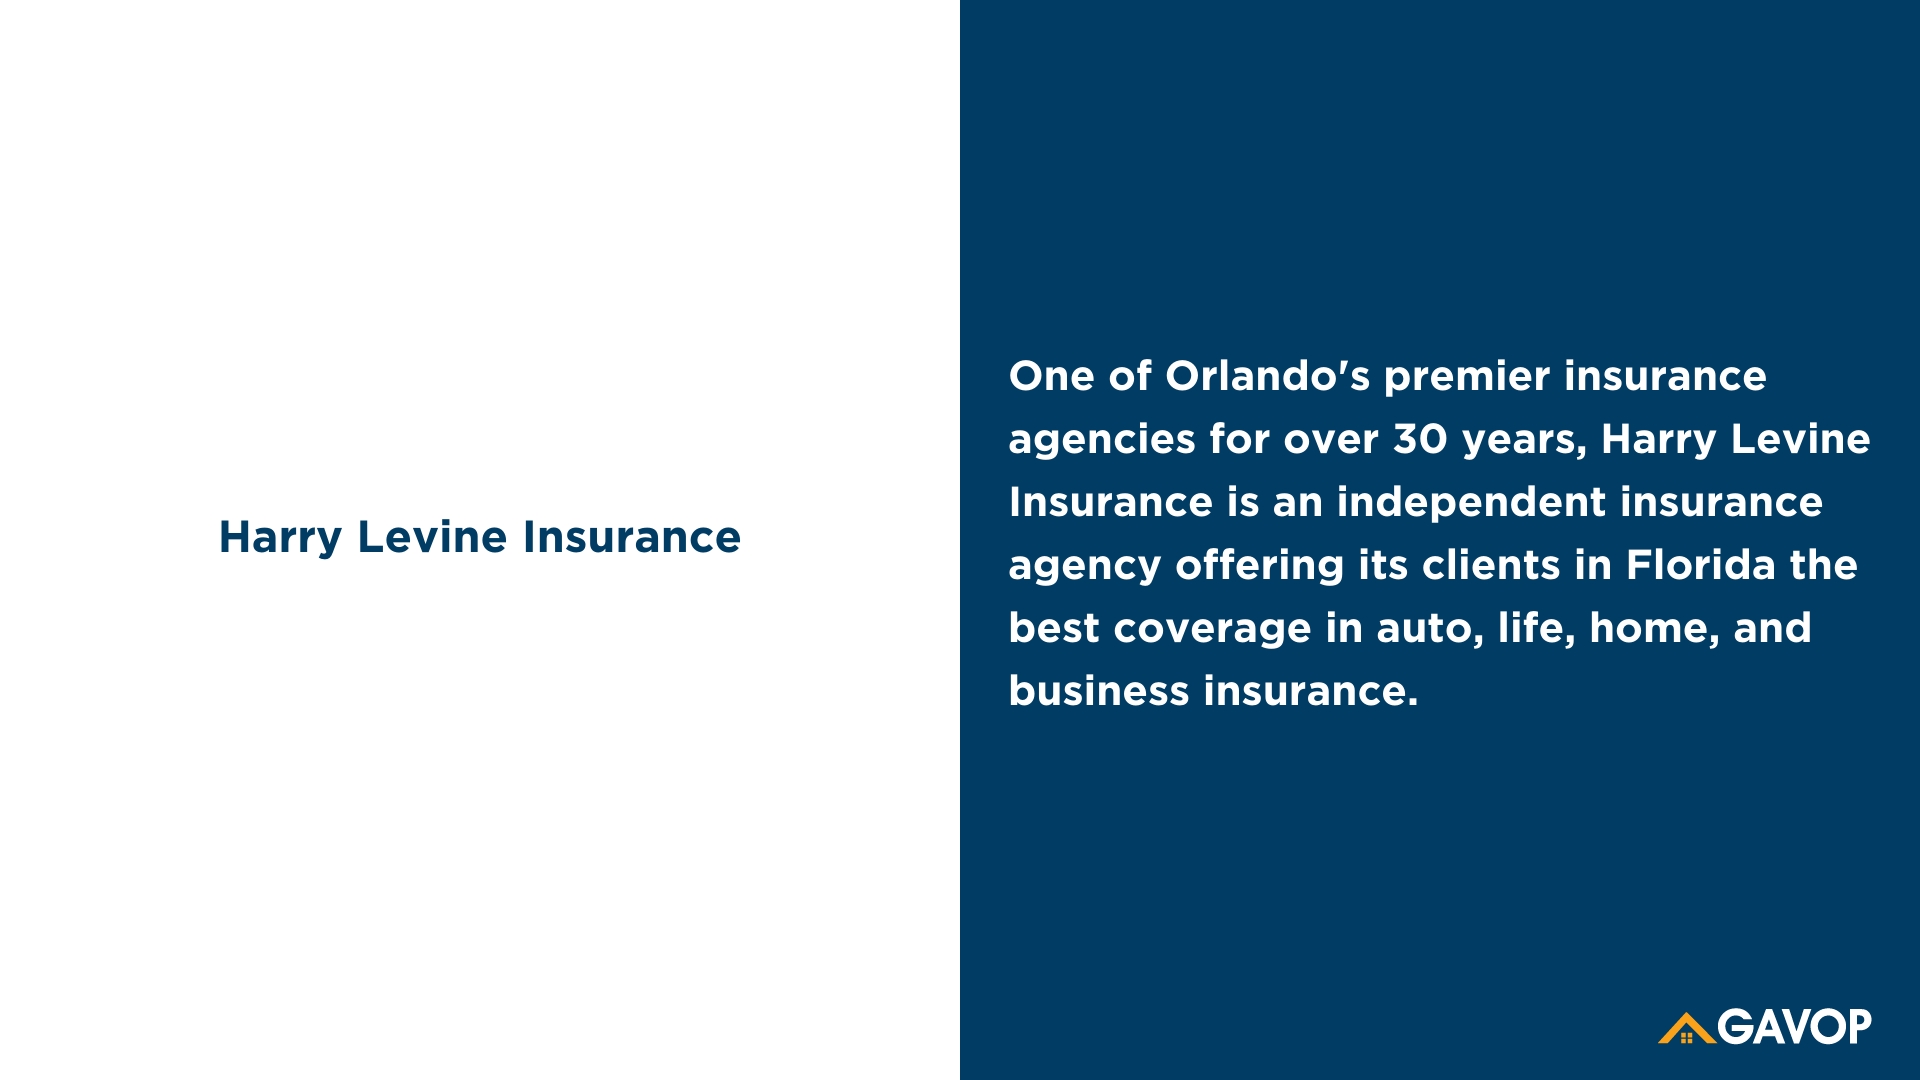 Harry Levine Insurance